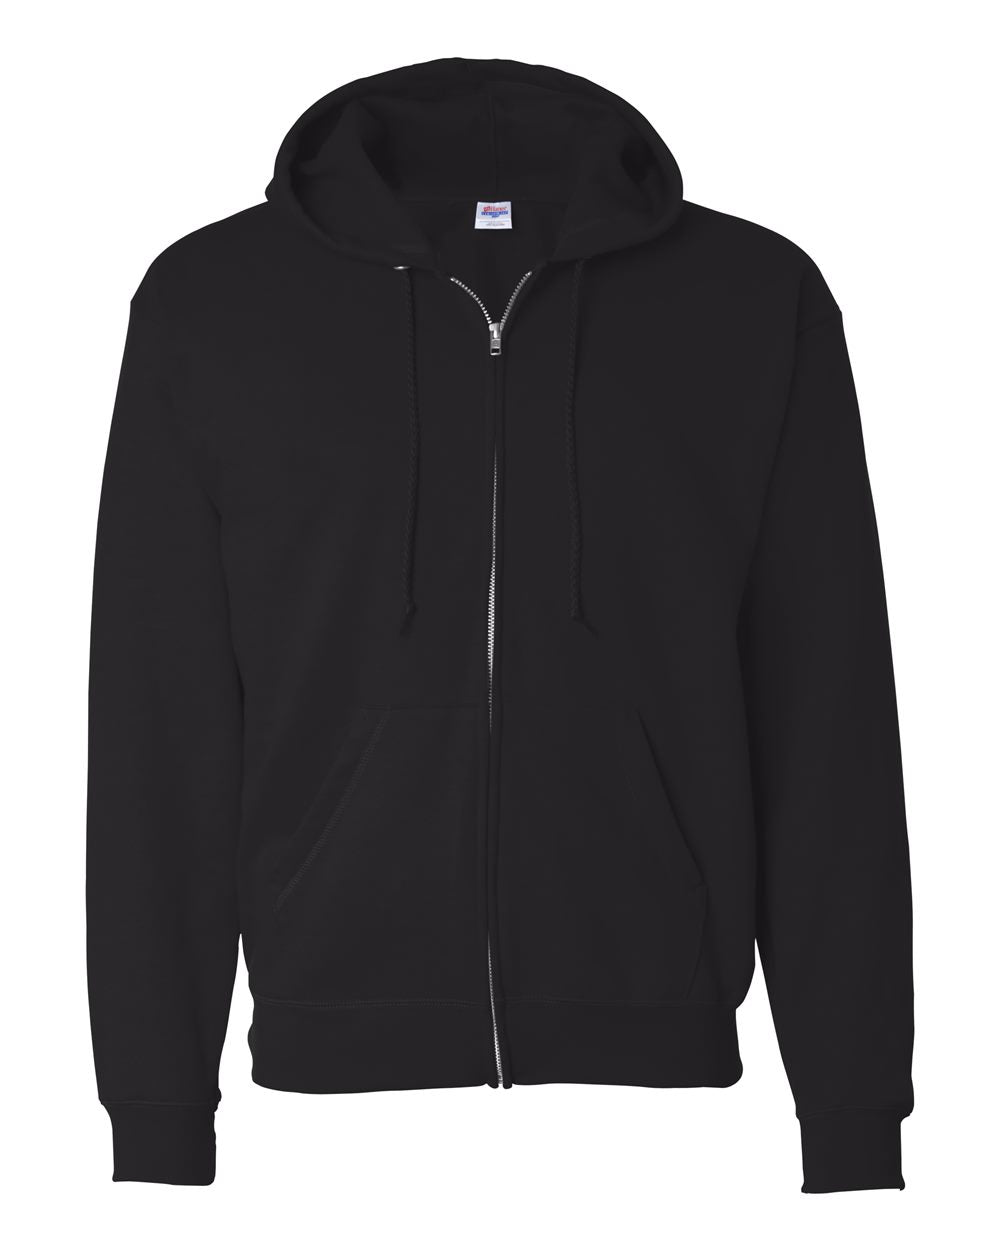 Hanes Adult ComfortBlend EcoSmart Full-Zip Hooded Sweatshirt